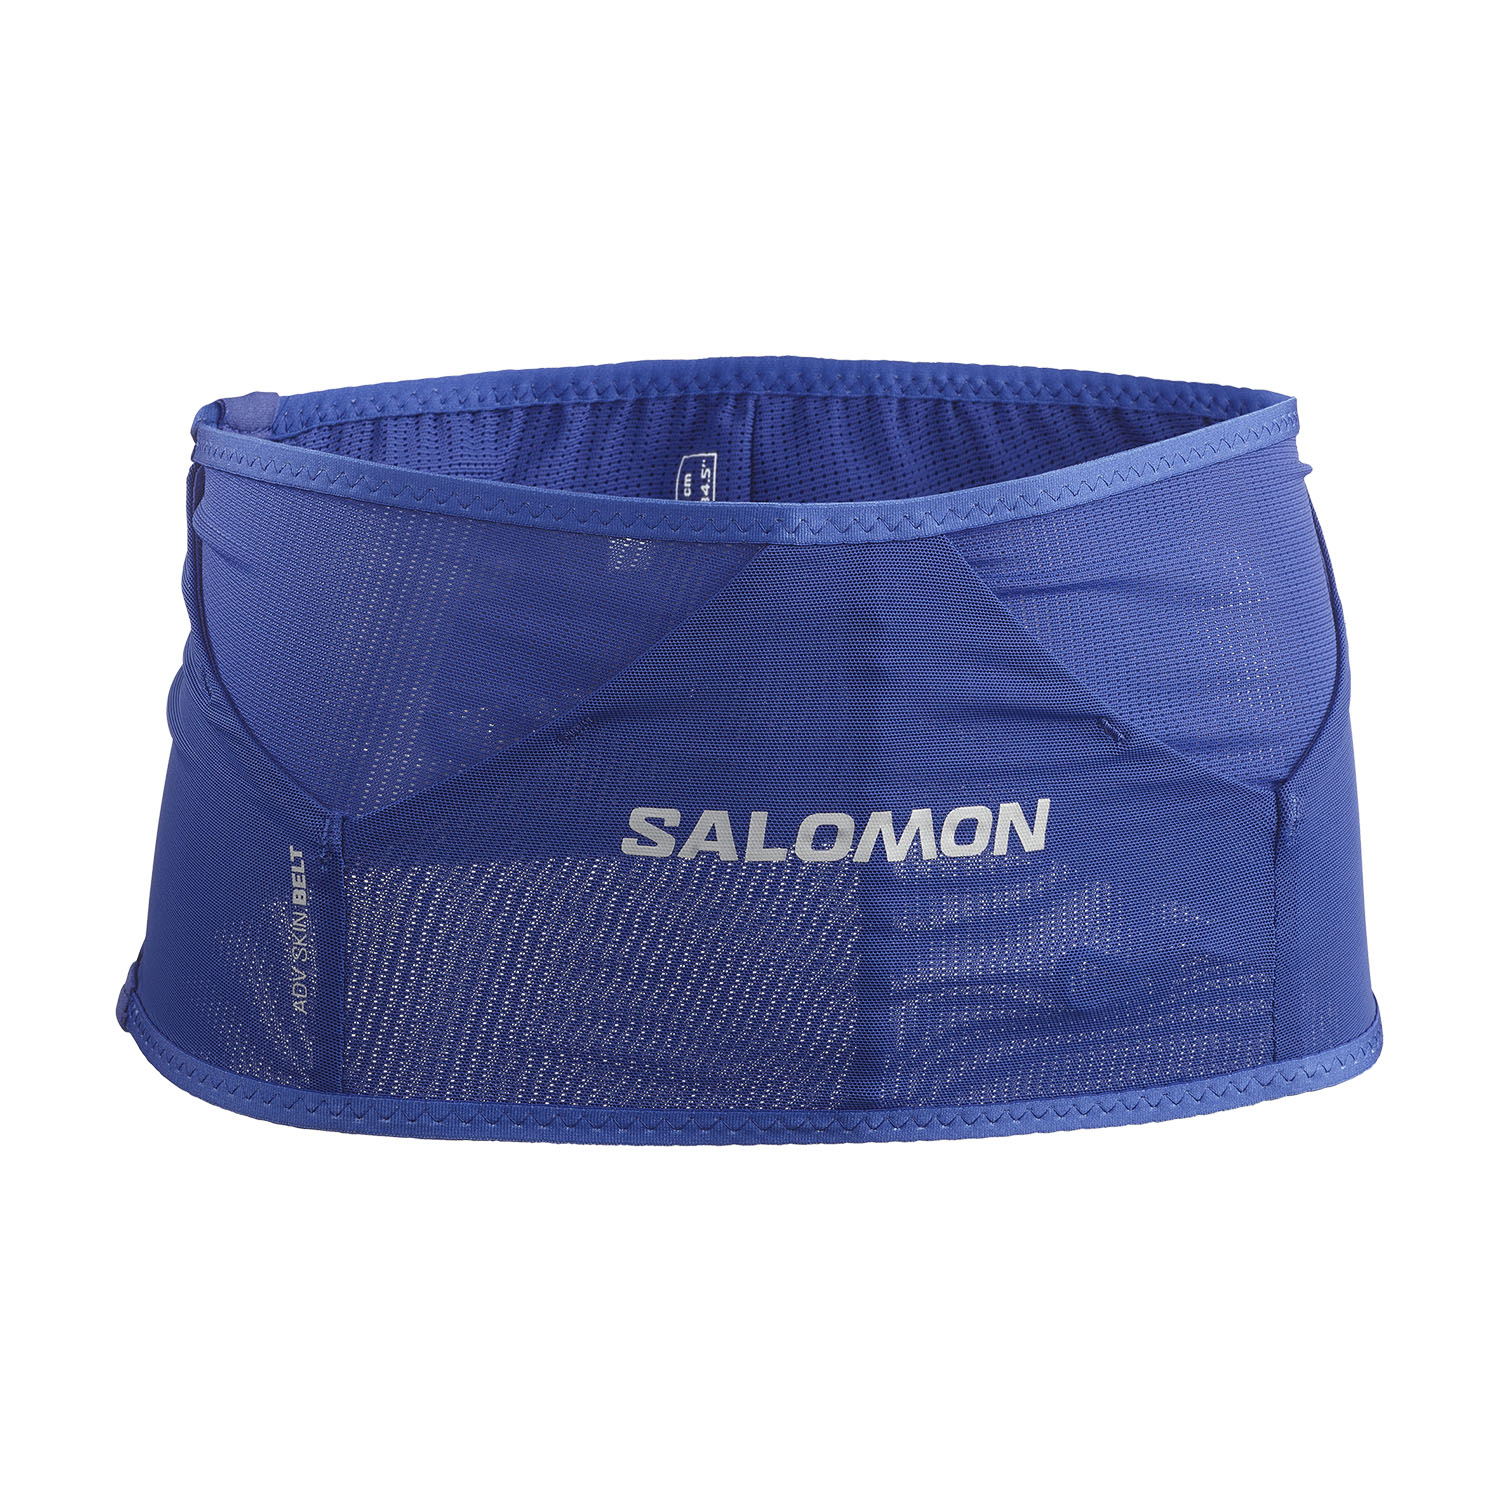 Salomon ADV Skin Belt - Surf The Web